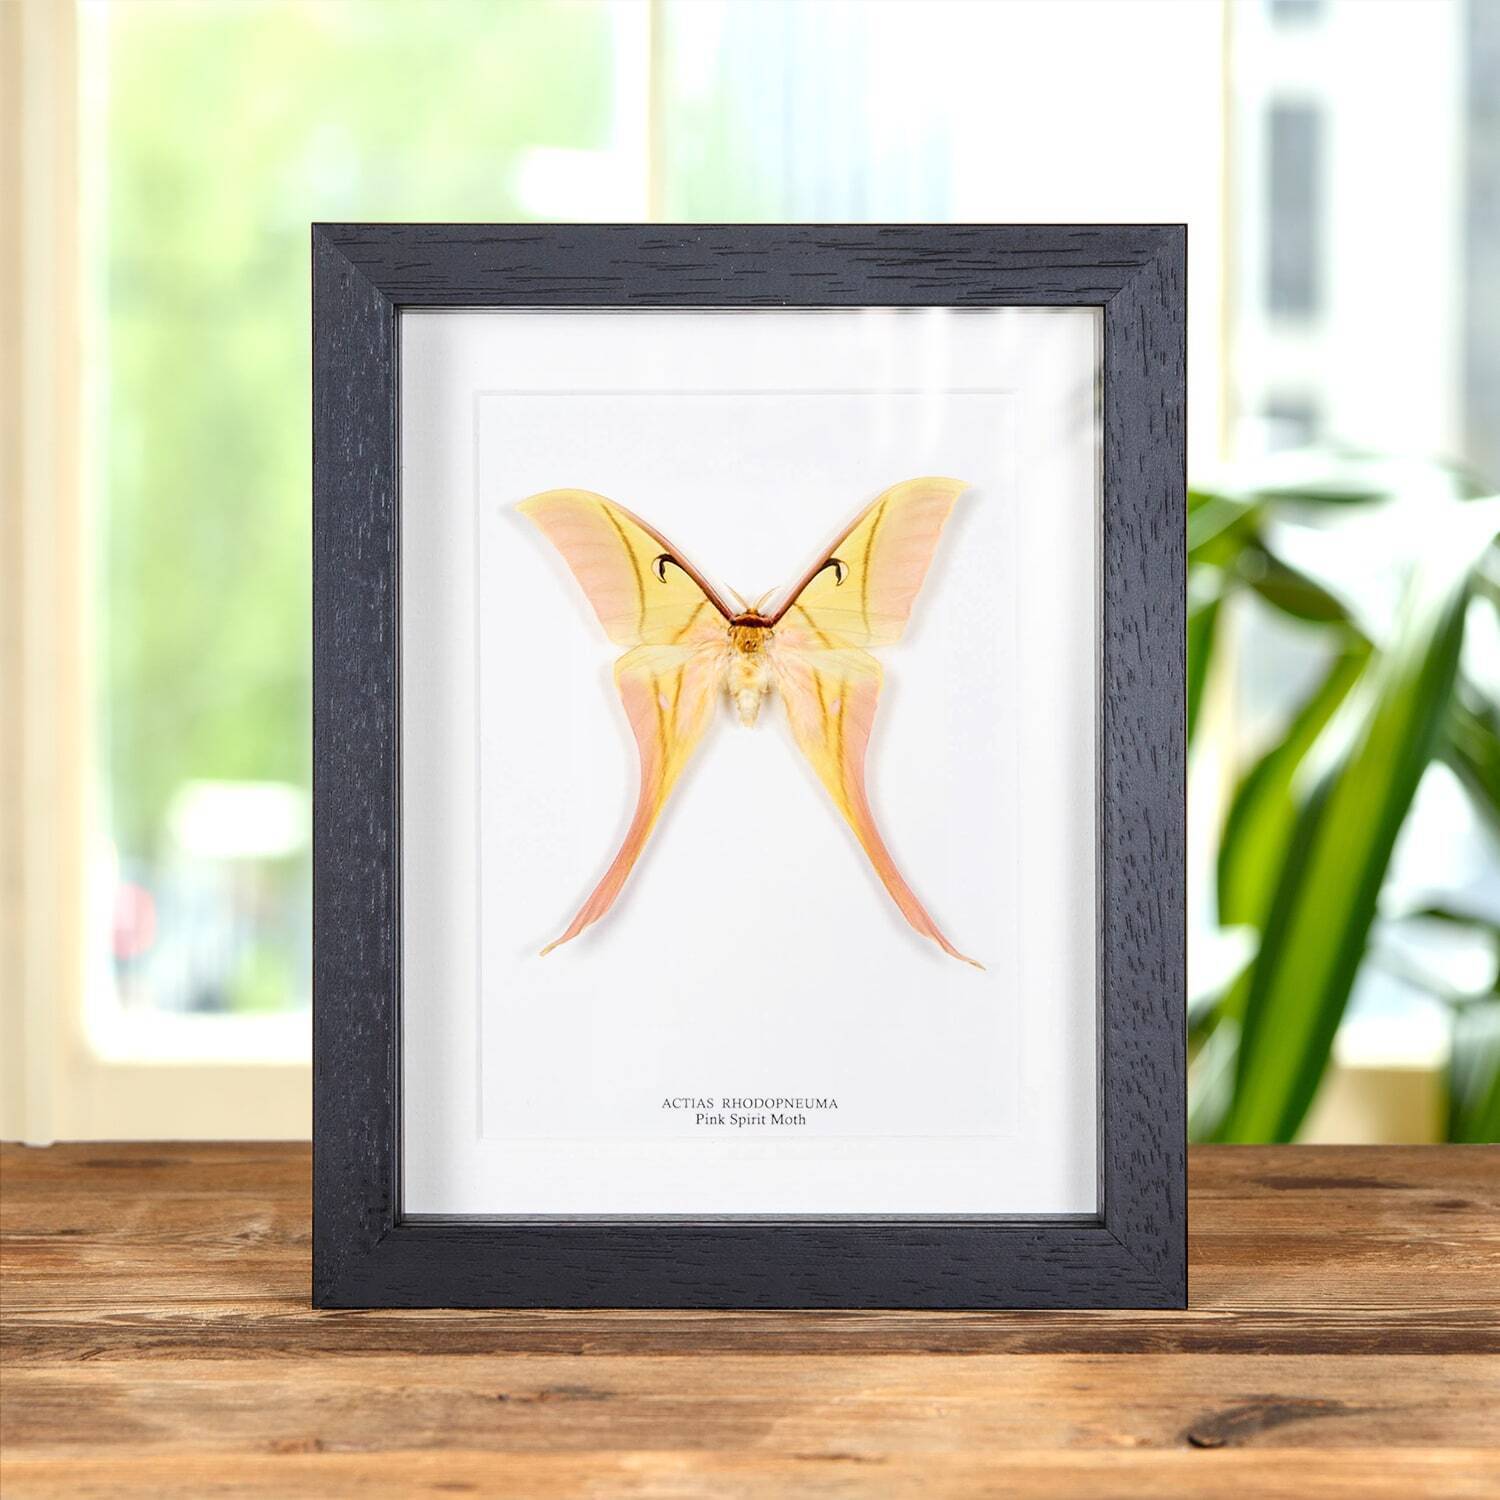 Rarely Seen Pink Spirit Taxidermy Moth Frame (Actias rhodopneuma)